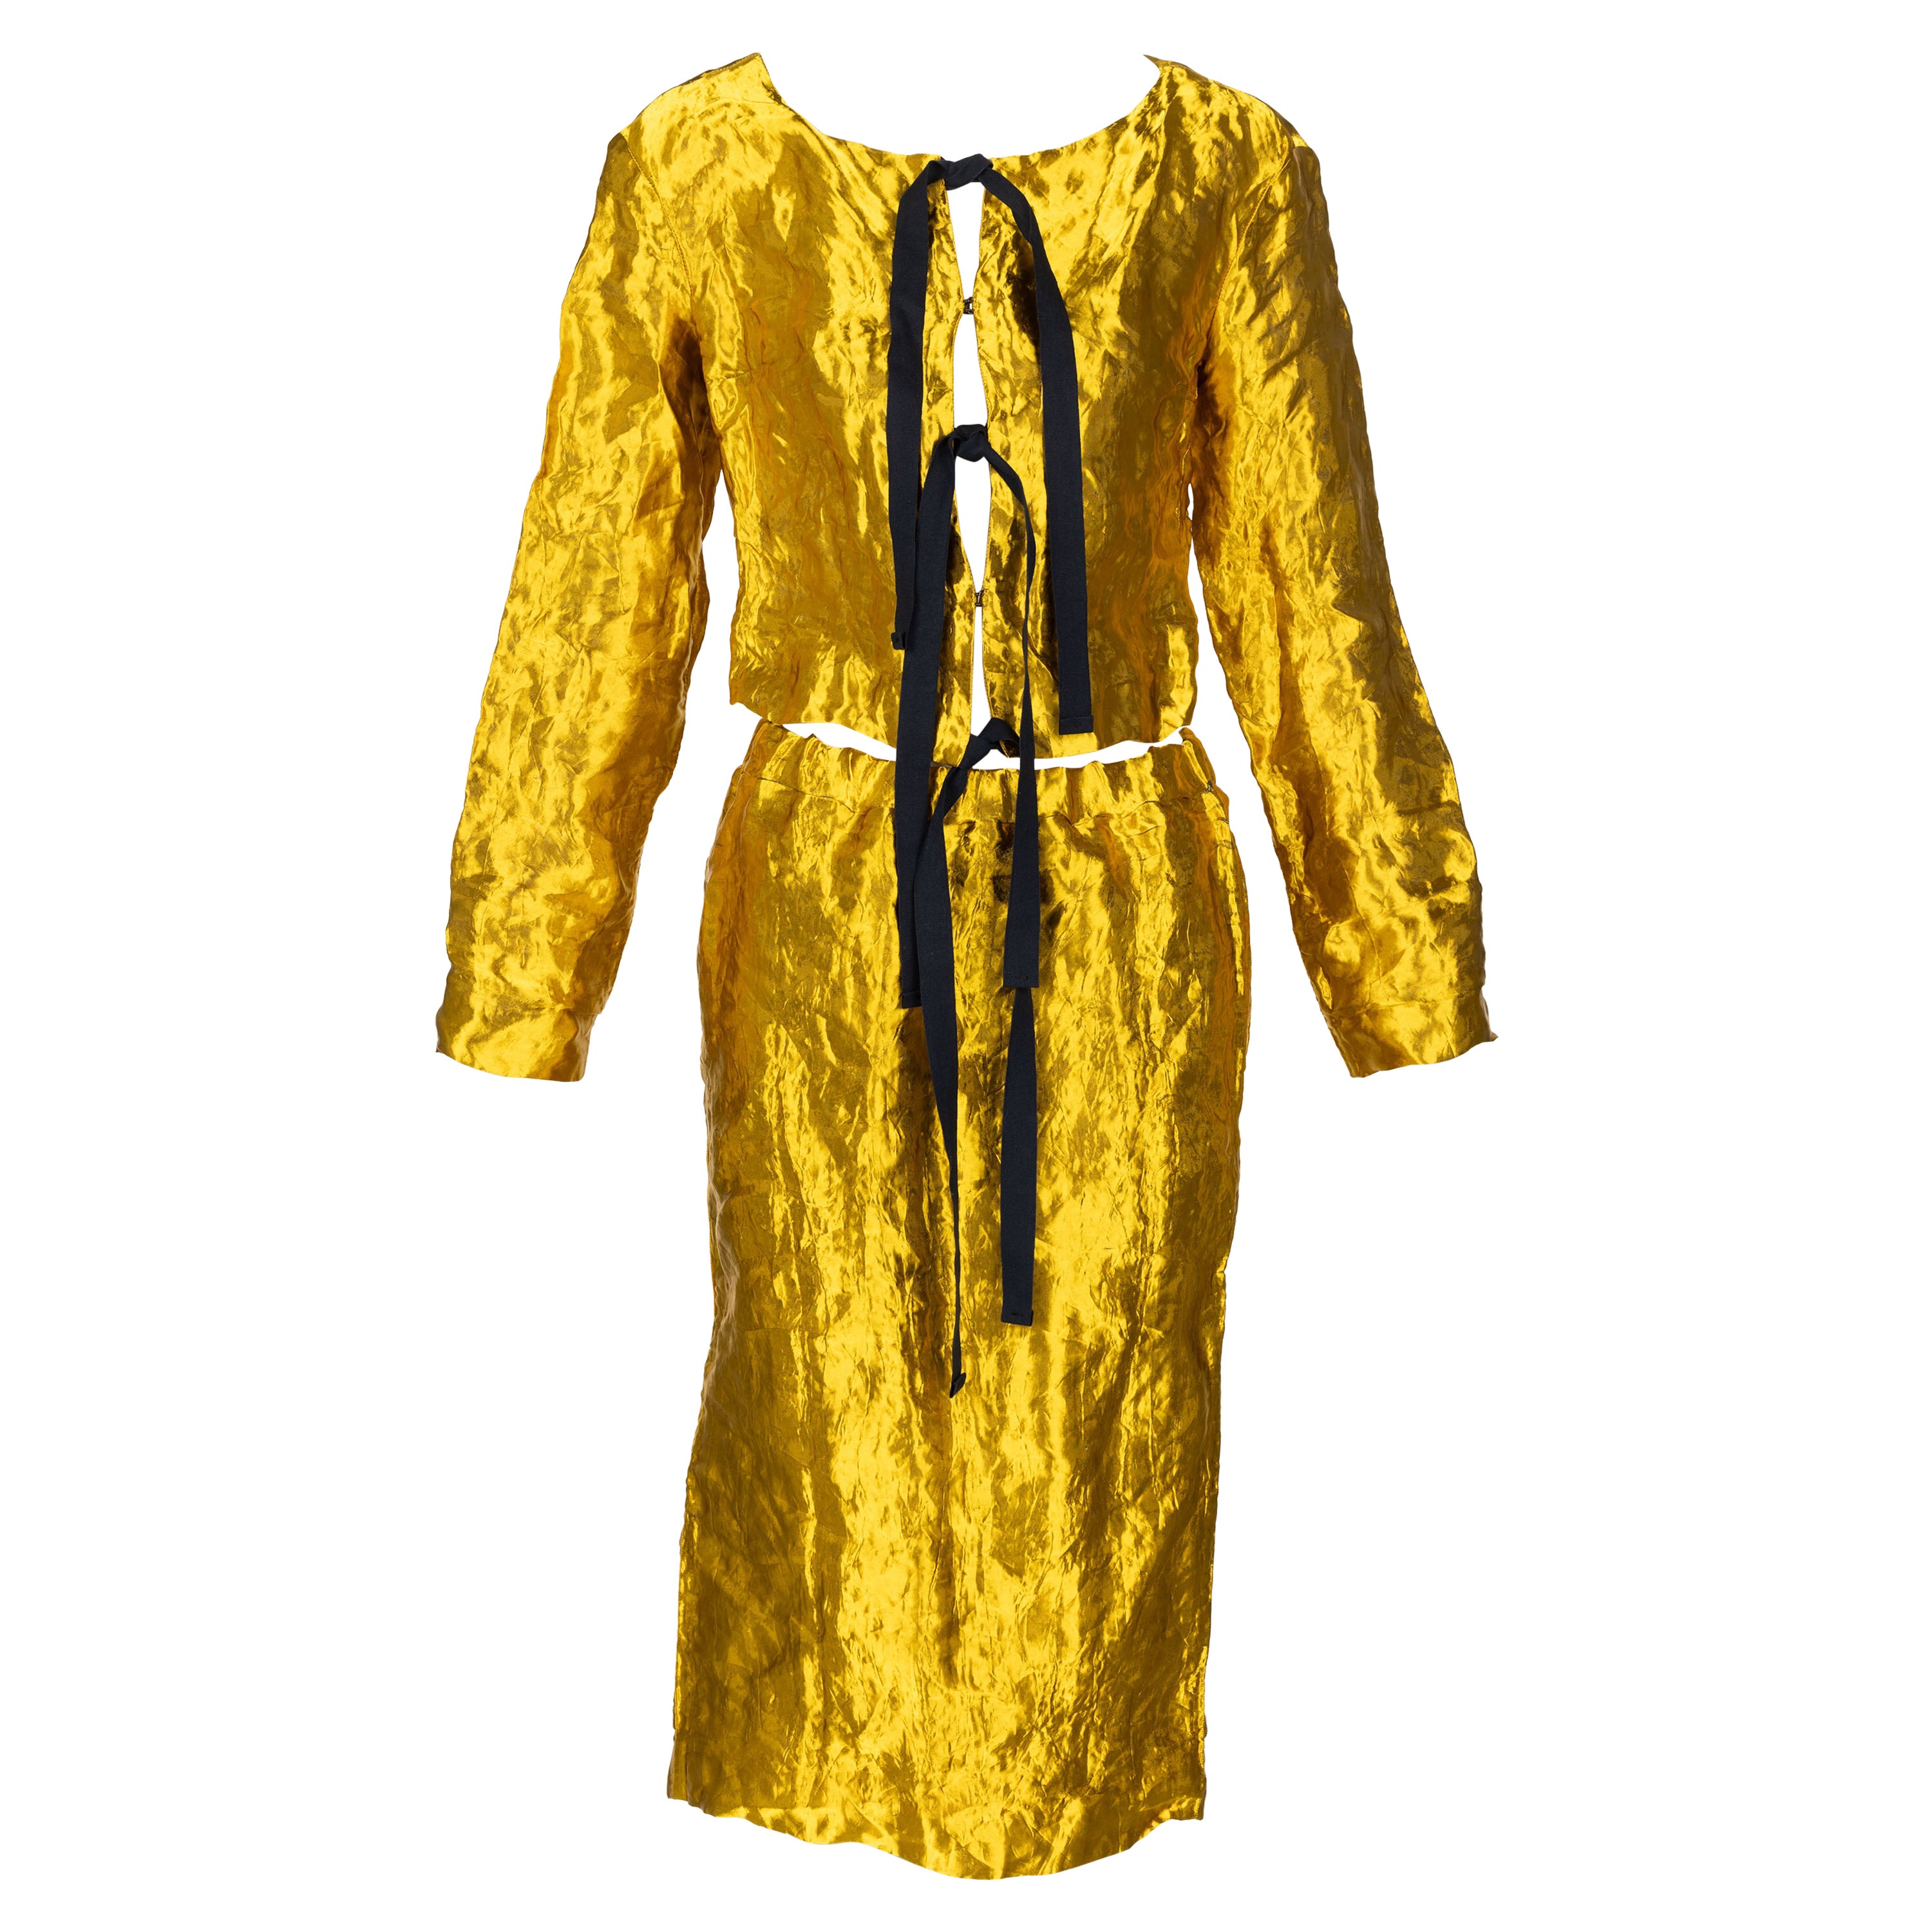 Prada Gold Metal Jacket Top & Skirt Set Spring 2009 For Sale